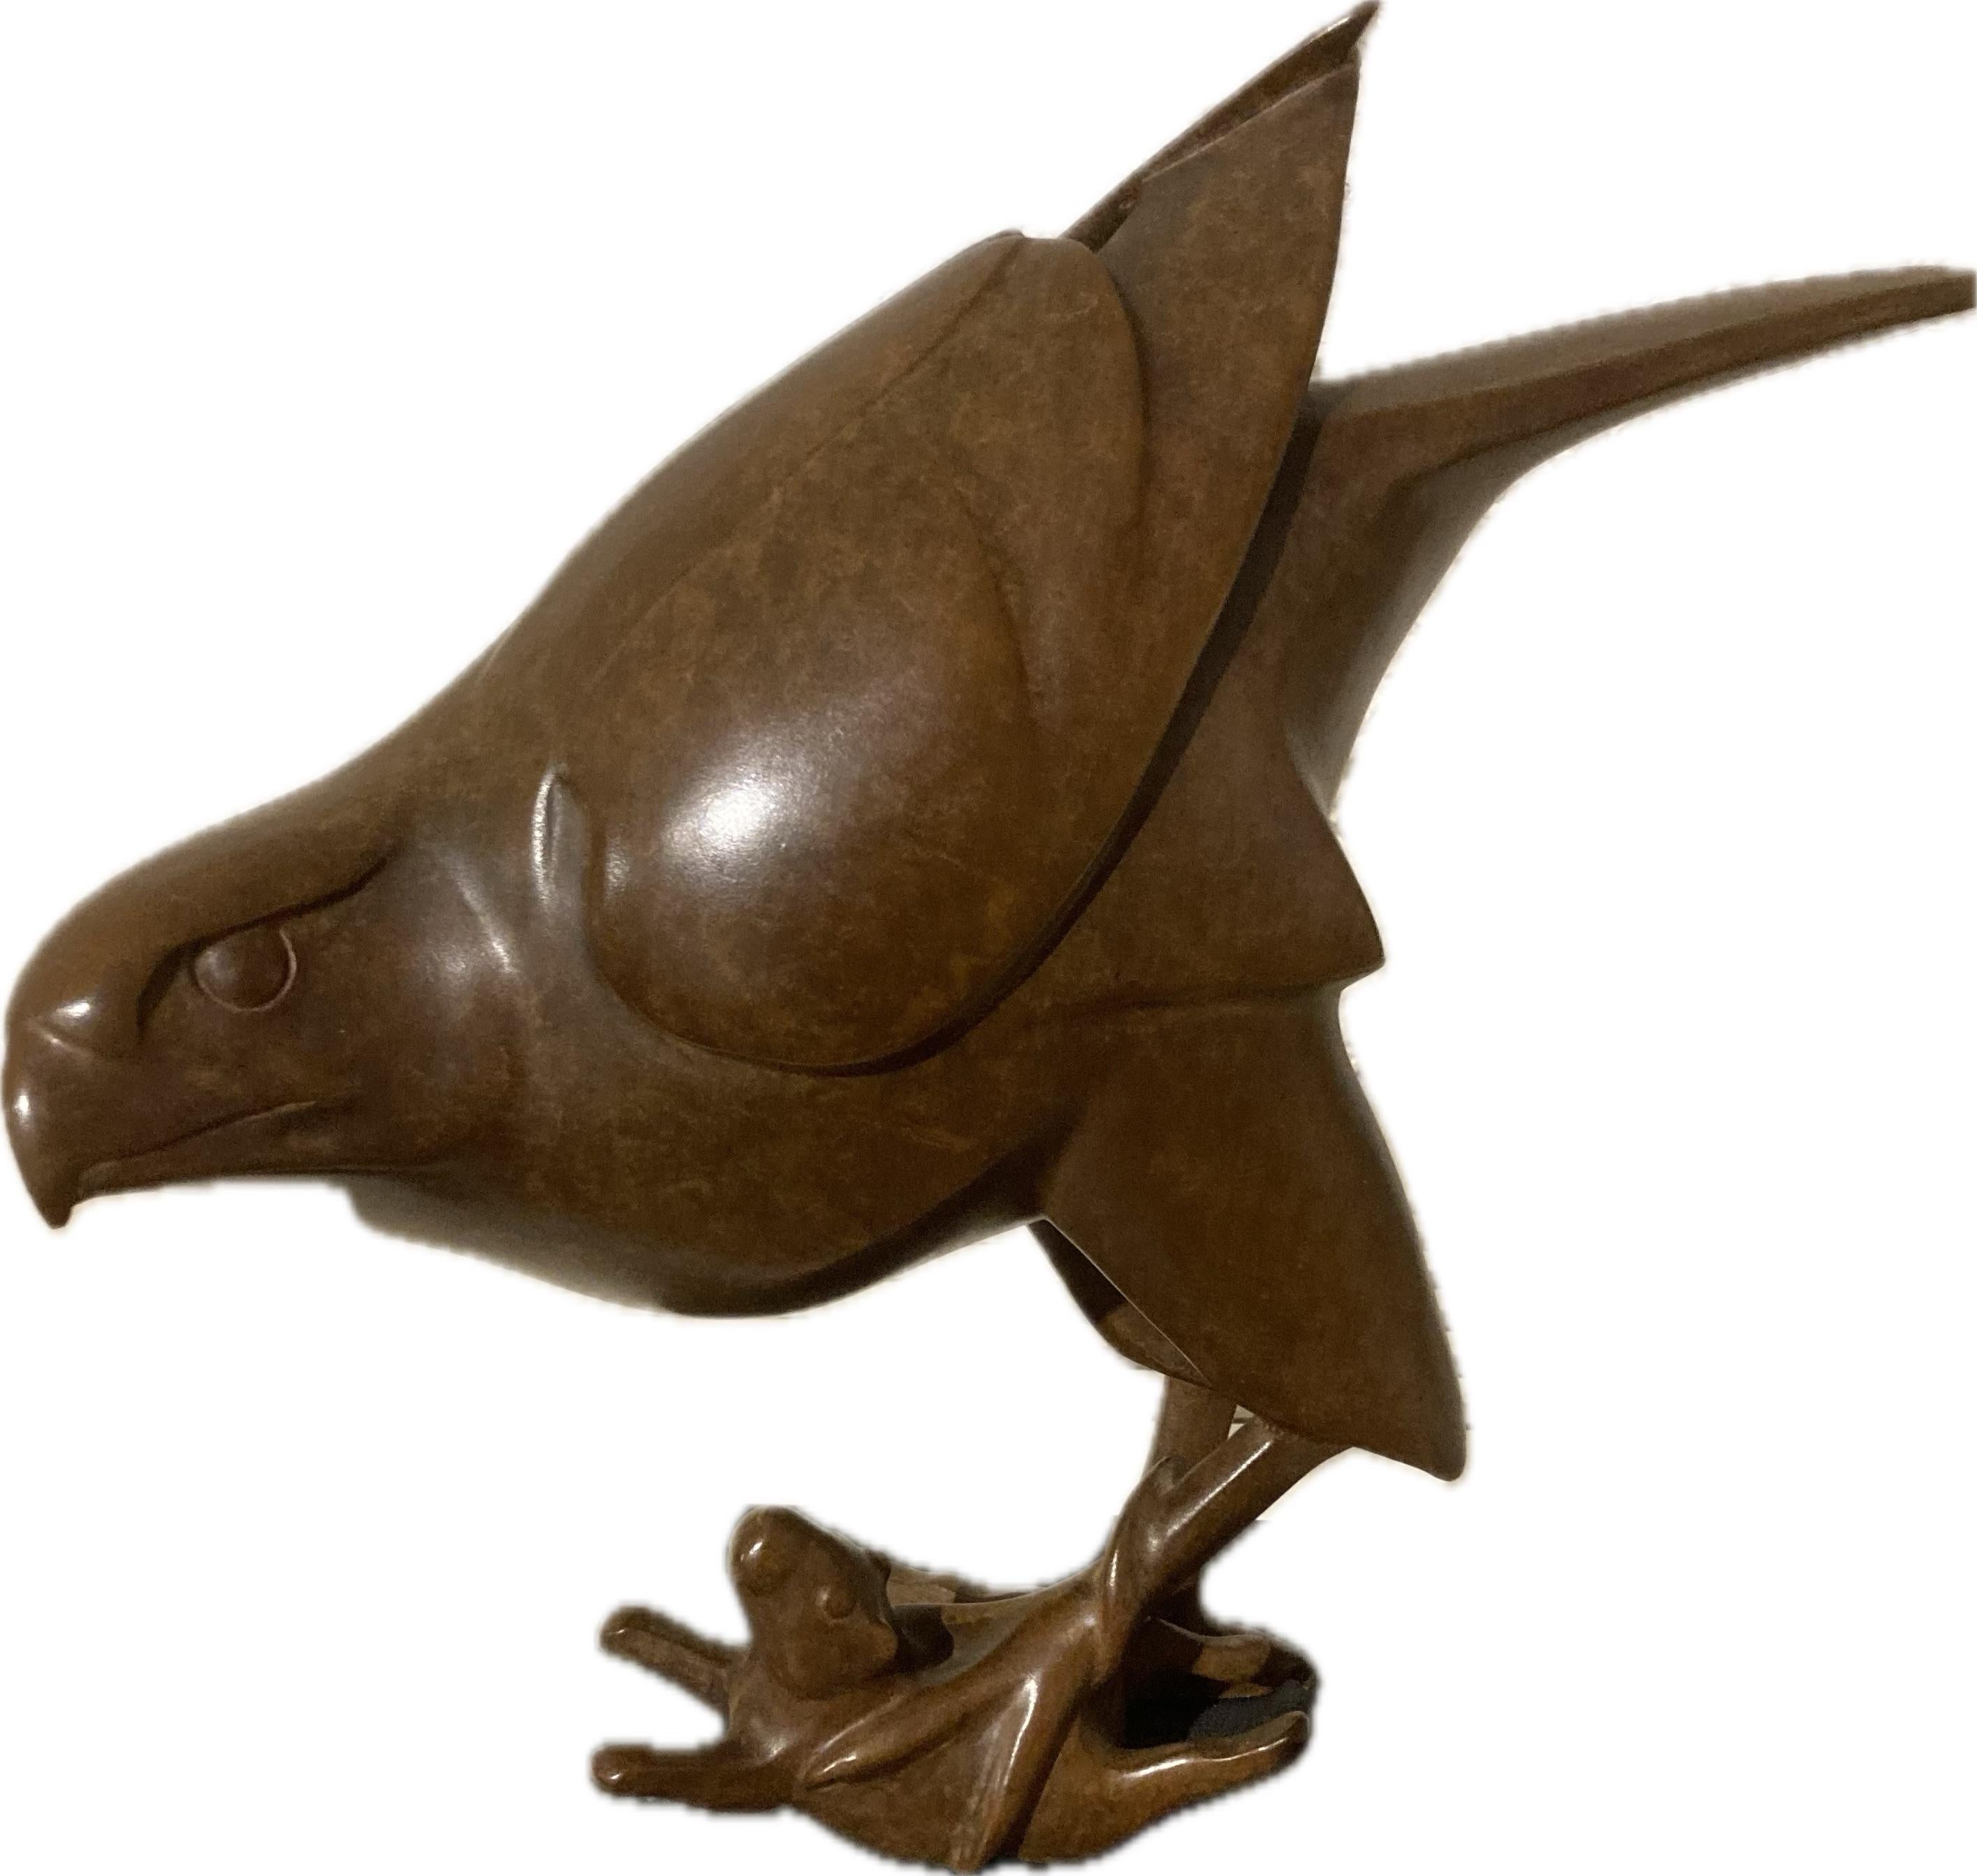 Evert den Hartog Figurative Sculpture - Roofvogel met Muis Prey Bird with Mouse Bronze Sculpture Limited Edition 